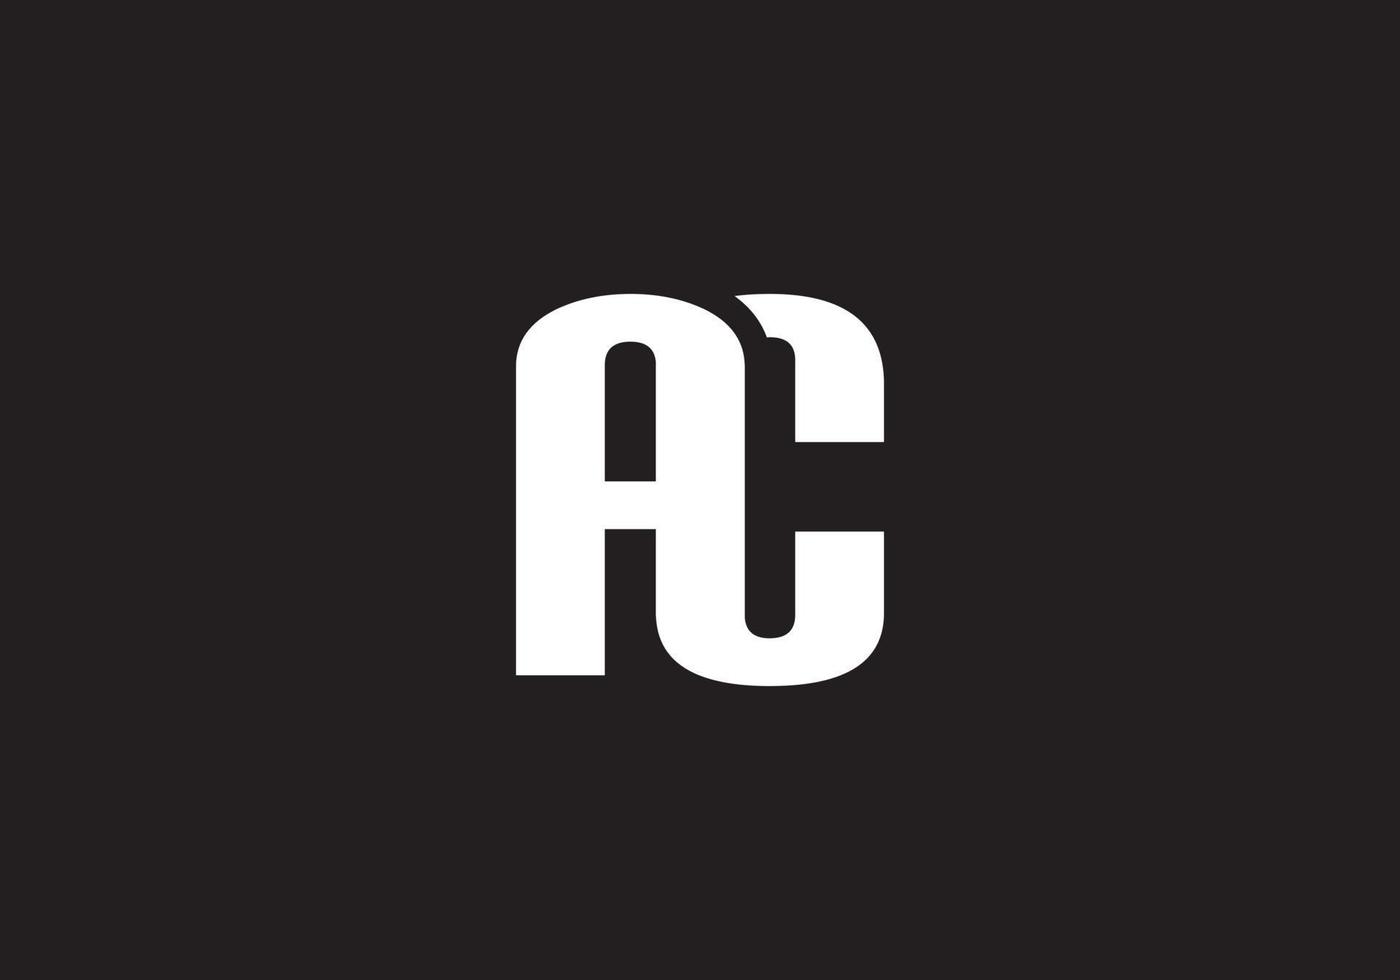 ac-Buchstaben-Design-Vektor-Bild vektor